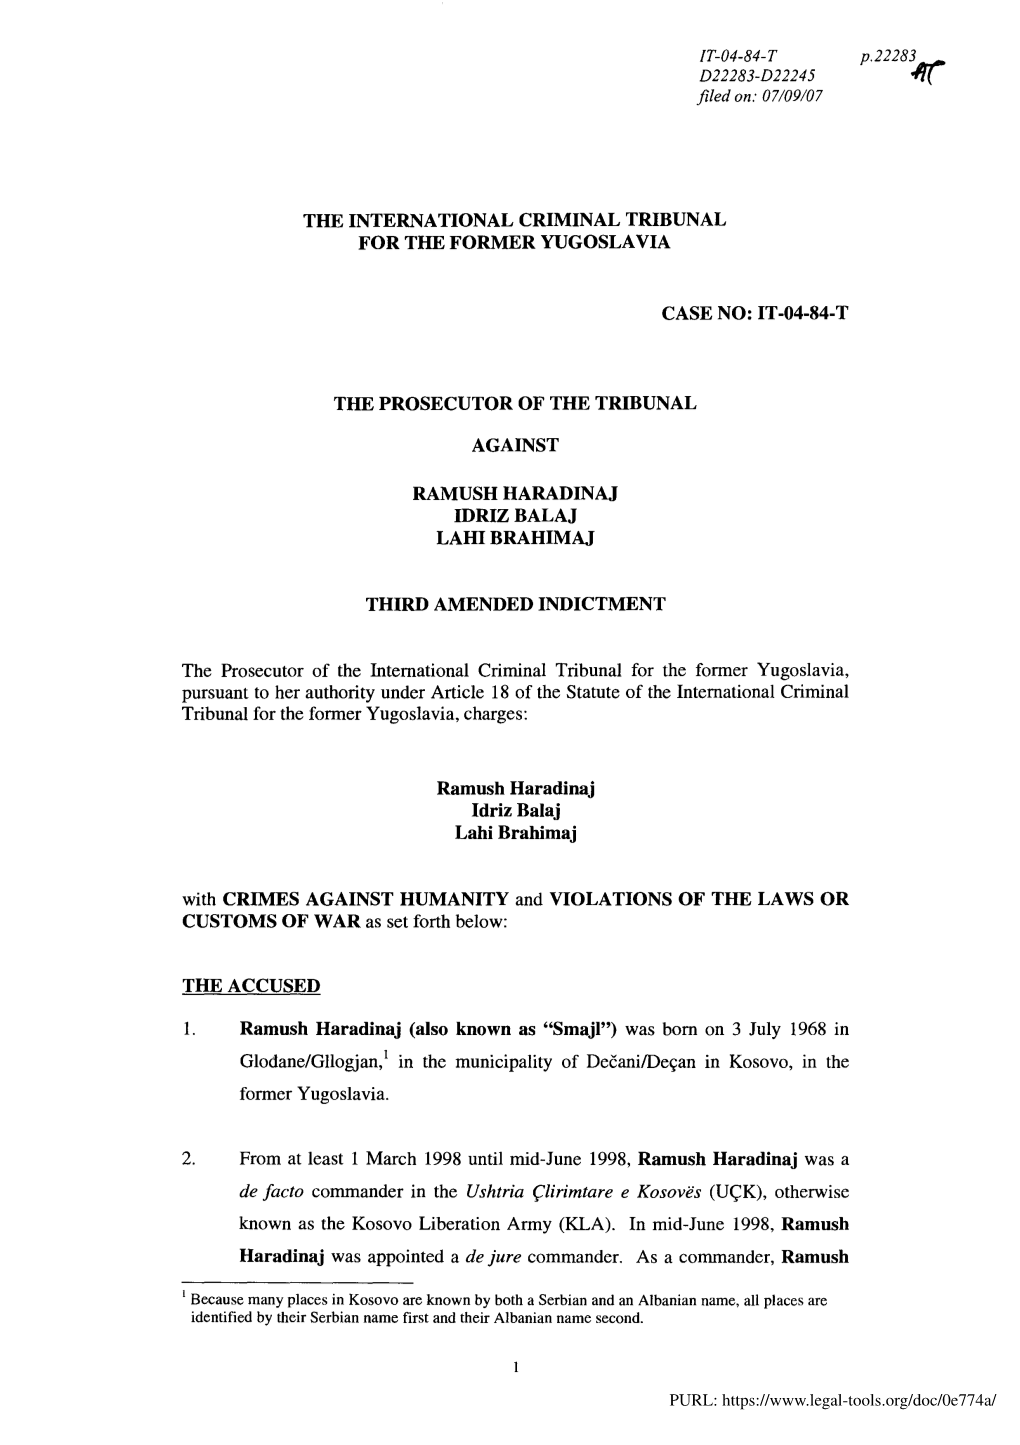 04-84-T the Prosecutor of the Tribunal Against Ramush